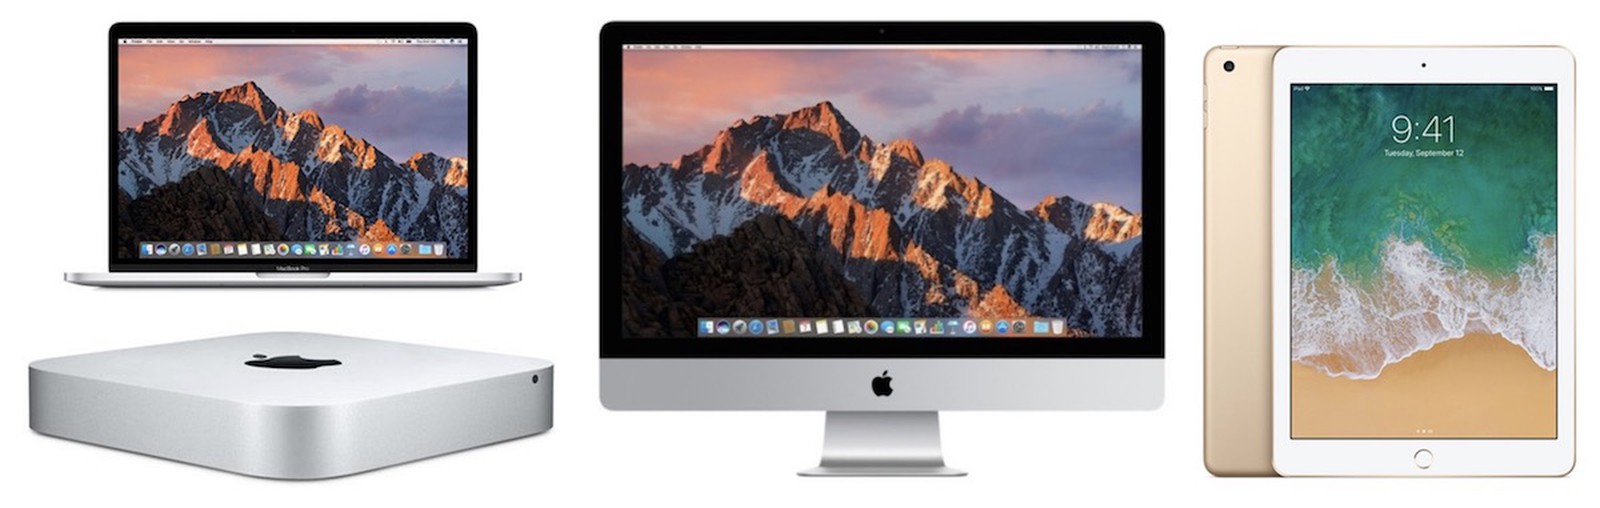 MacMall Begins Black Friday Savings on MacBook Pro, iMac, Mac mini